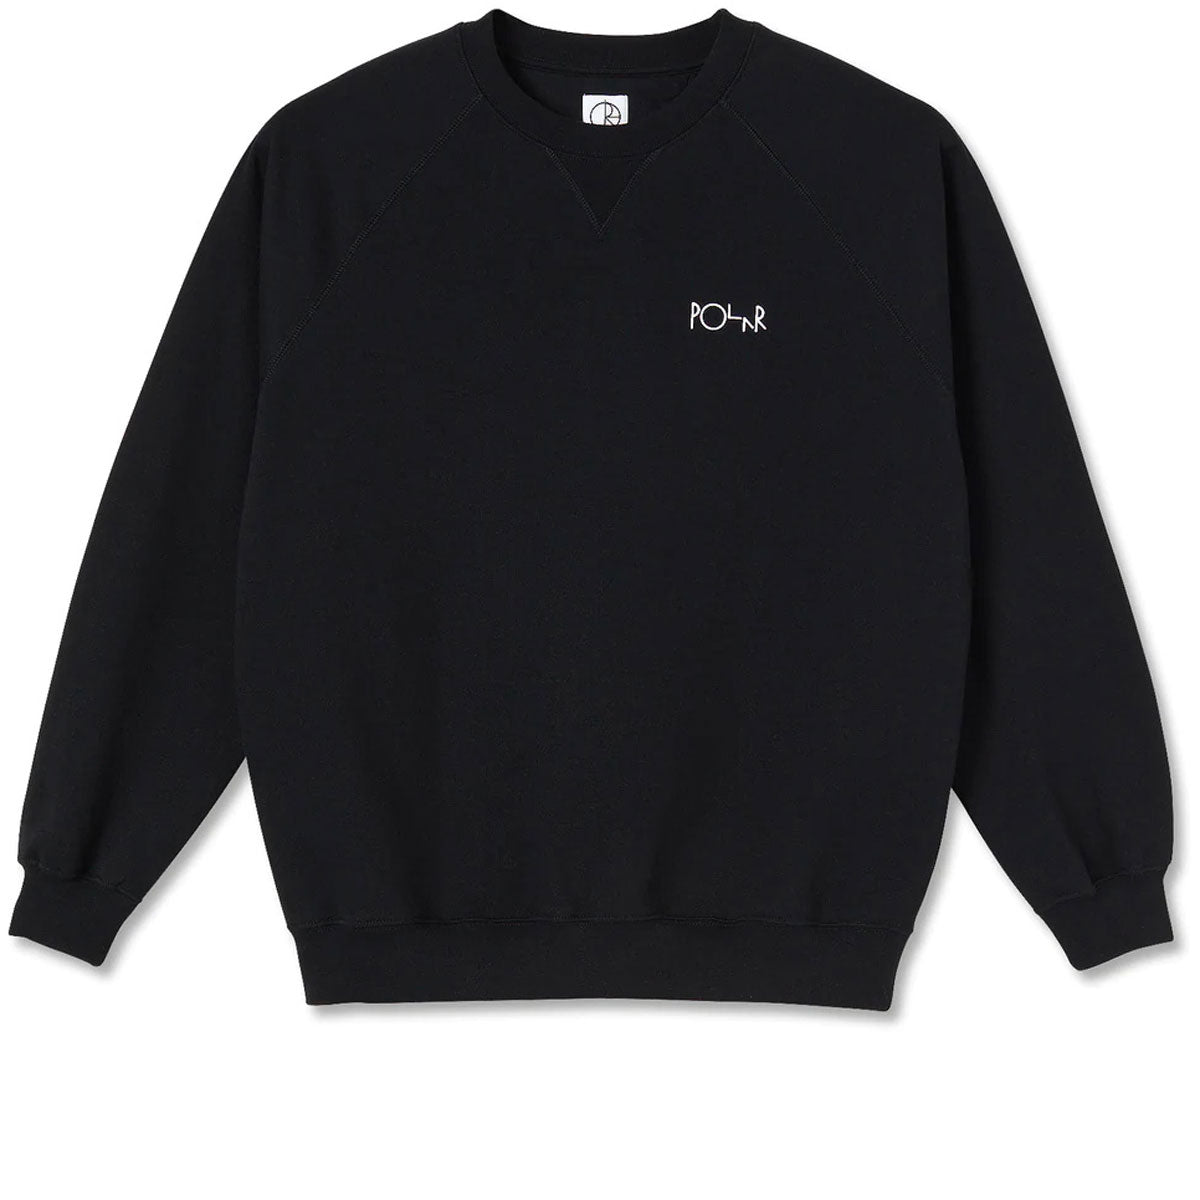 Polar Default Crewneck Sweatshirt - Black image 1